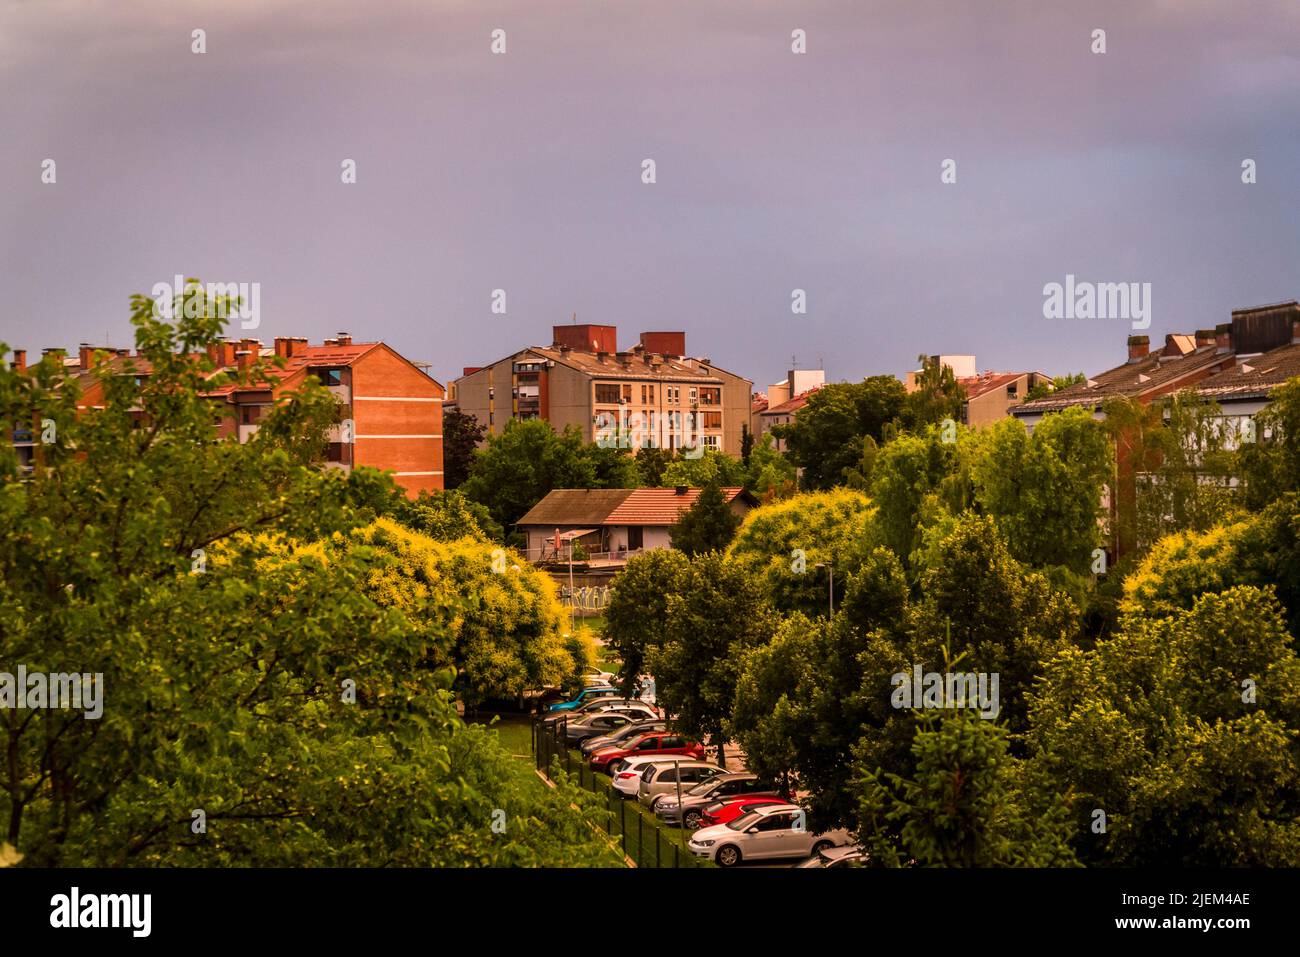 Spansko suburban neighbourhood in late sunshine, Zagreb, Croatia Stock Photo